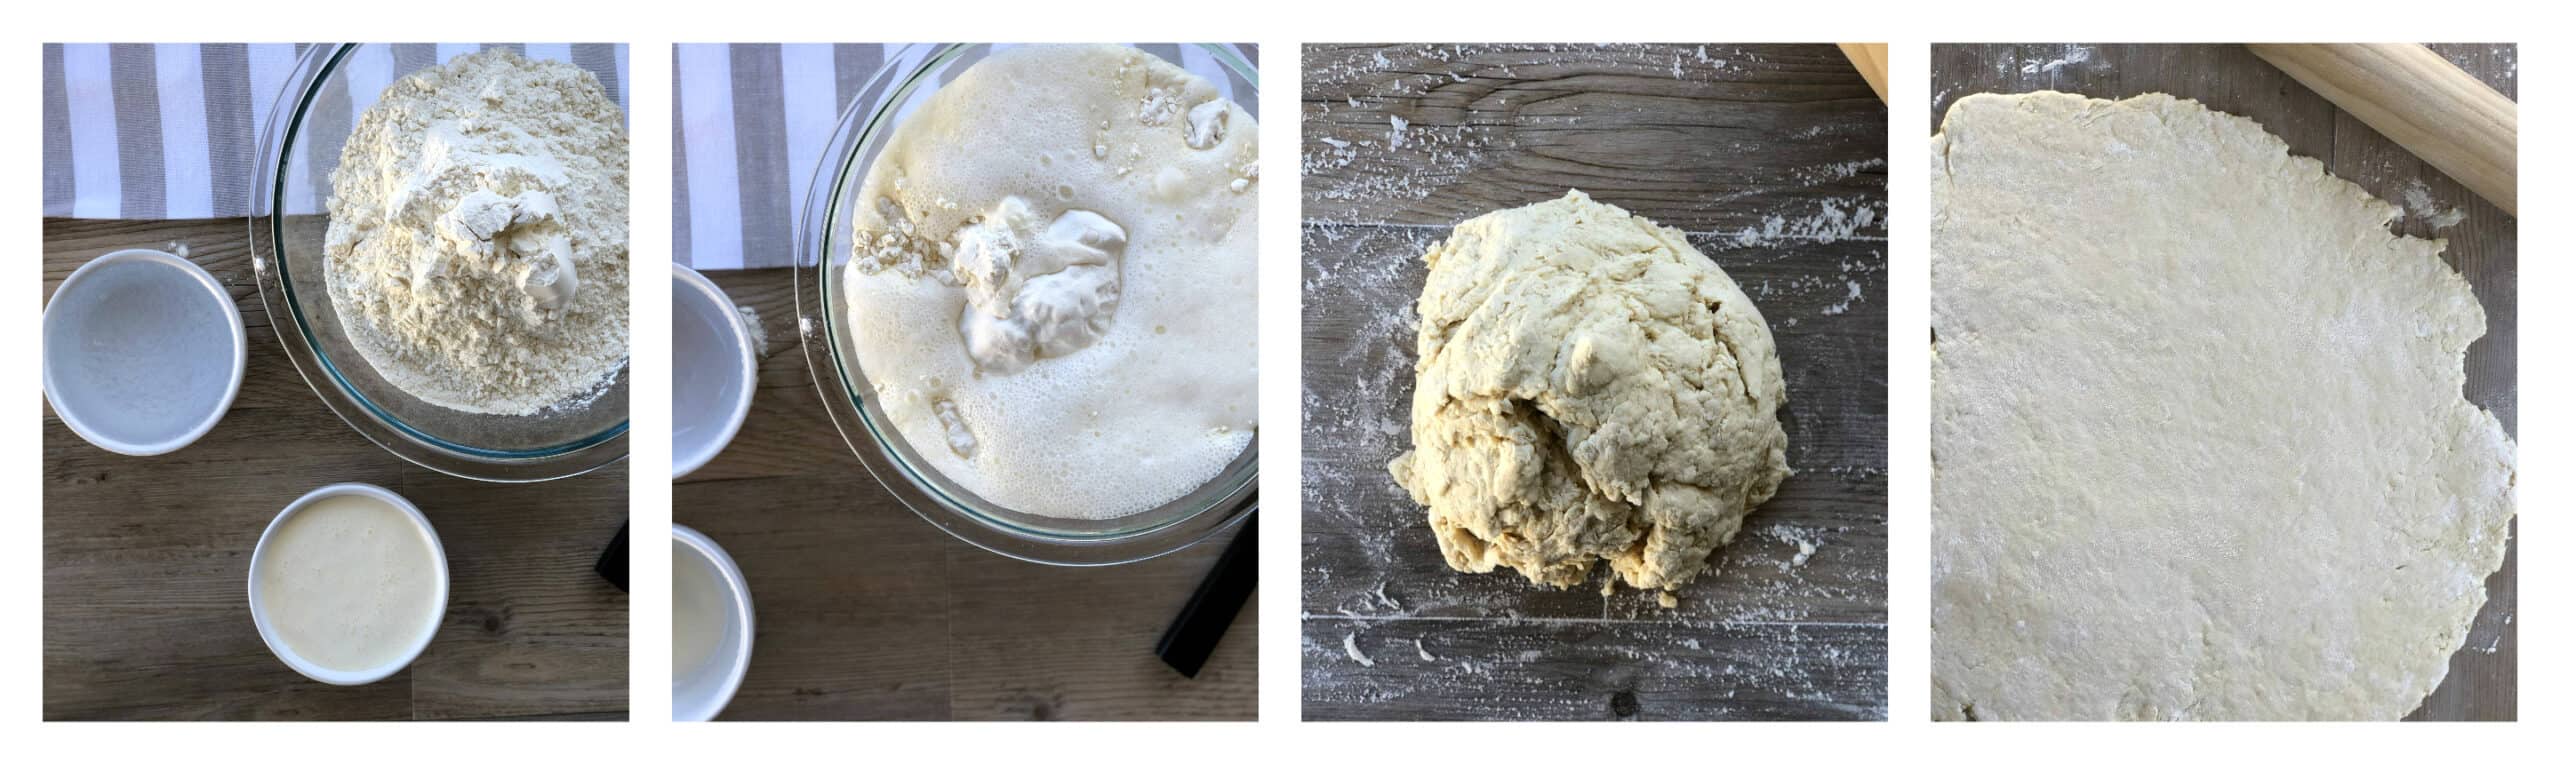 Method for making 3 ingredient lemonade and cream scone scrolls